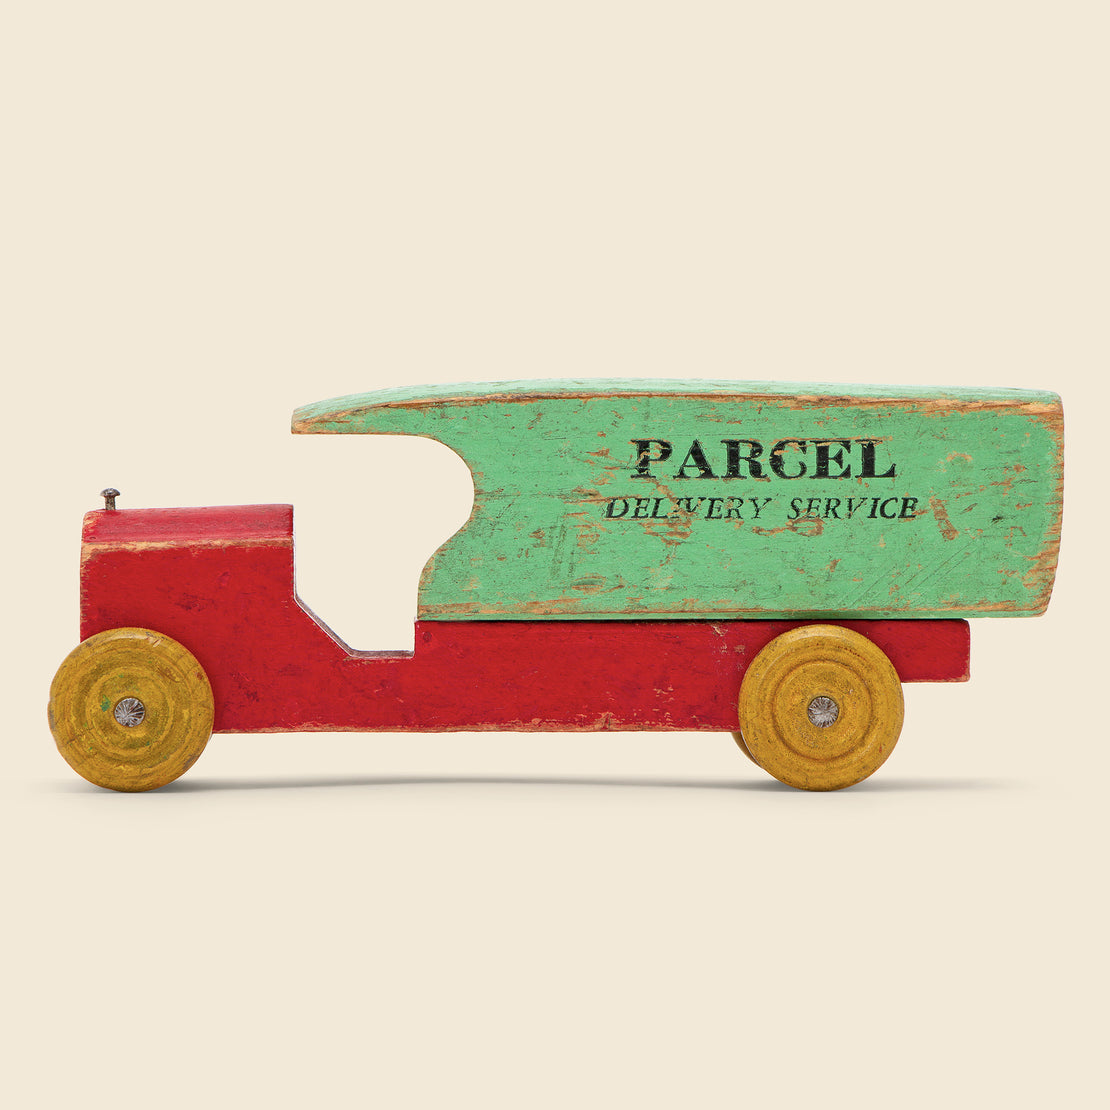 Vintage Parcel Delivery Service Toy Truck